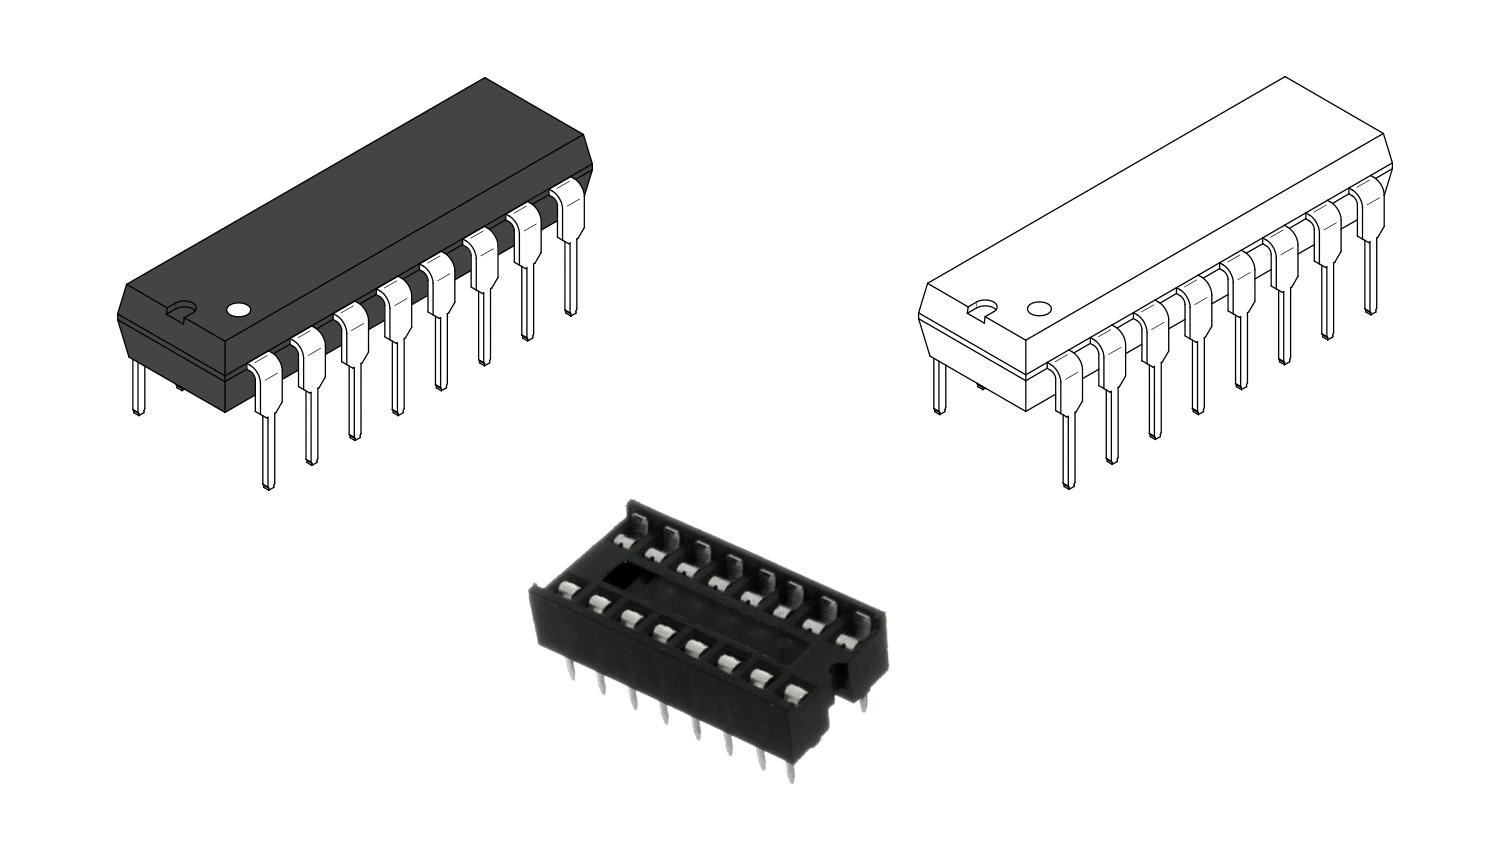 IC sockets illustrating VHDL configurations